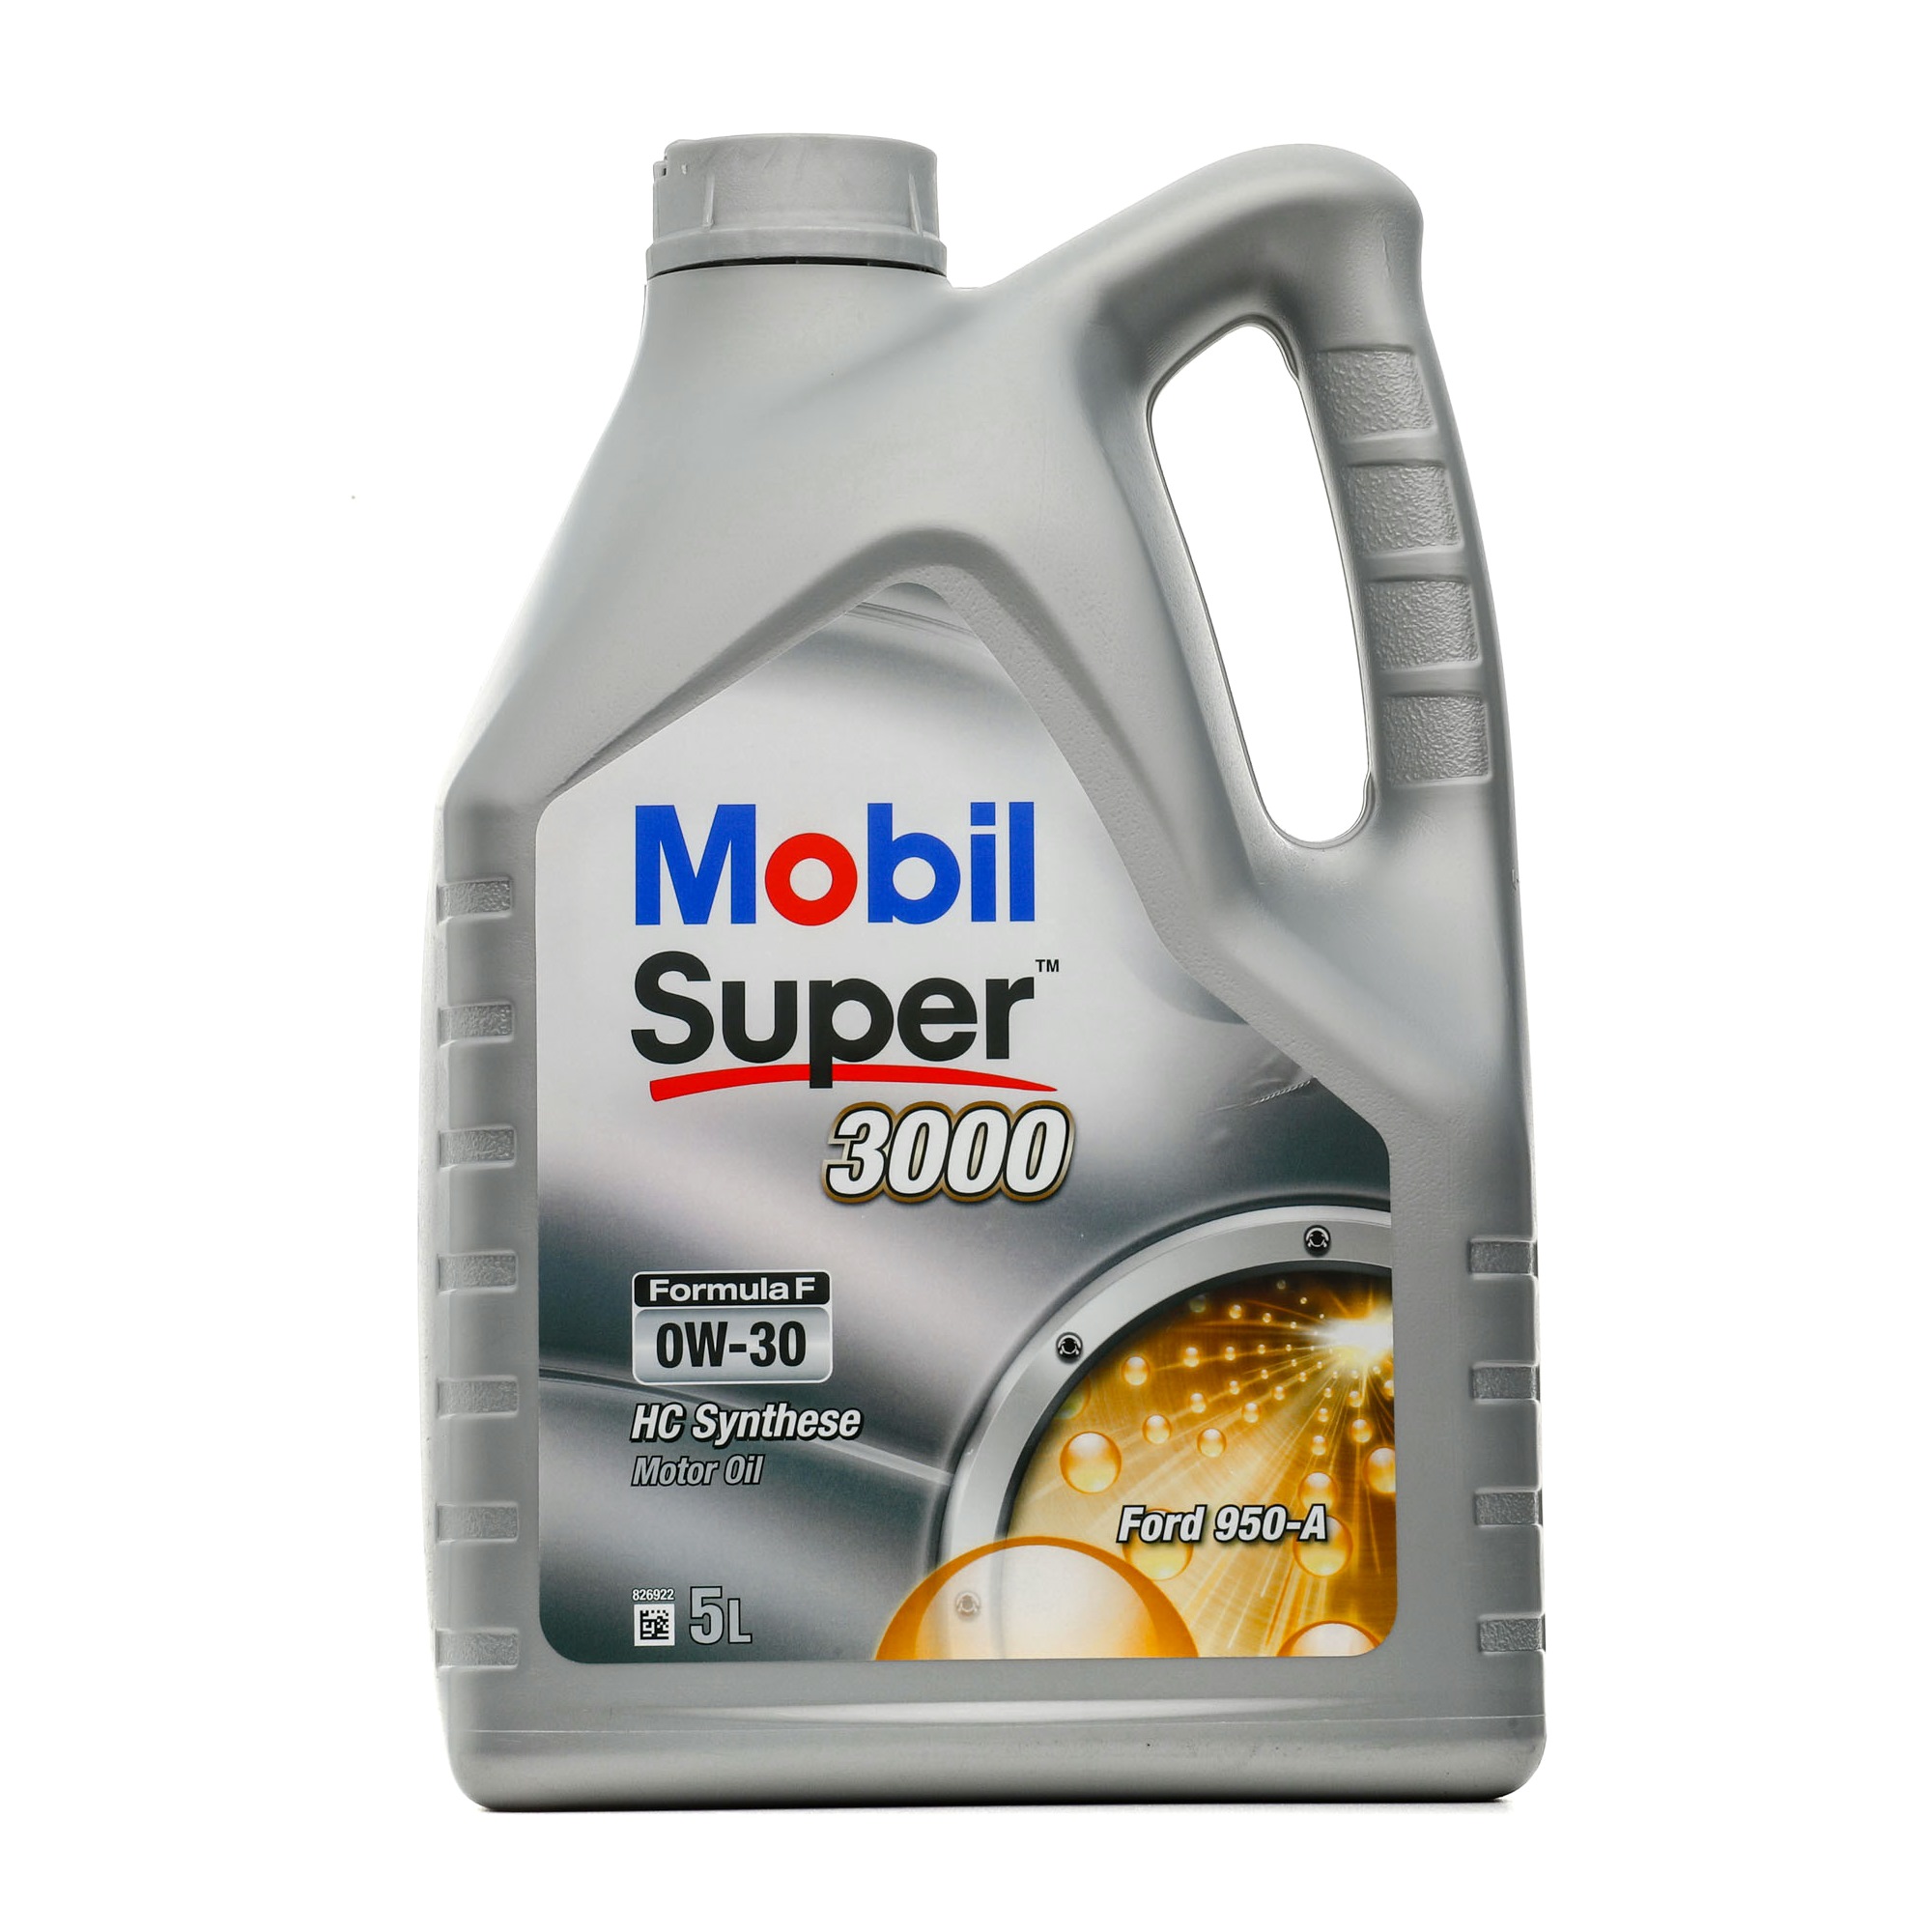 MOBIL Super, 3000 F 154487 Aceite de motor 0W-30, 5L